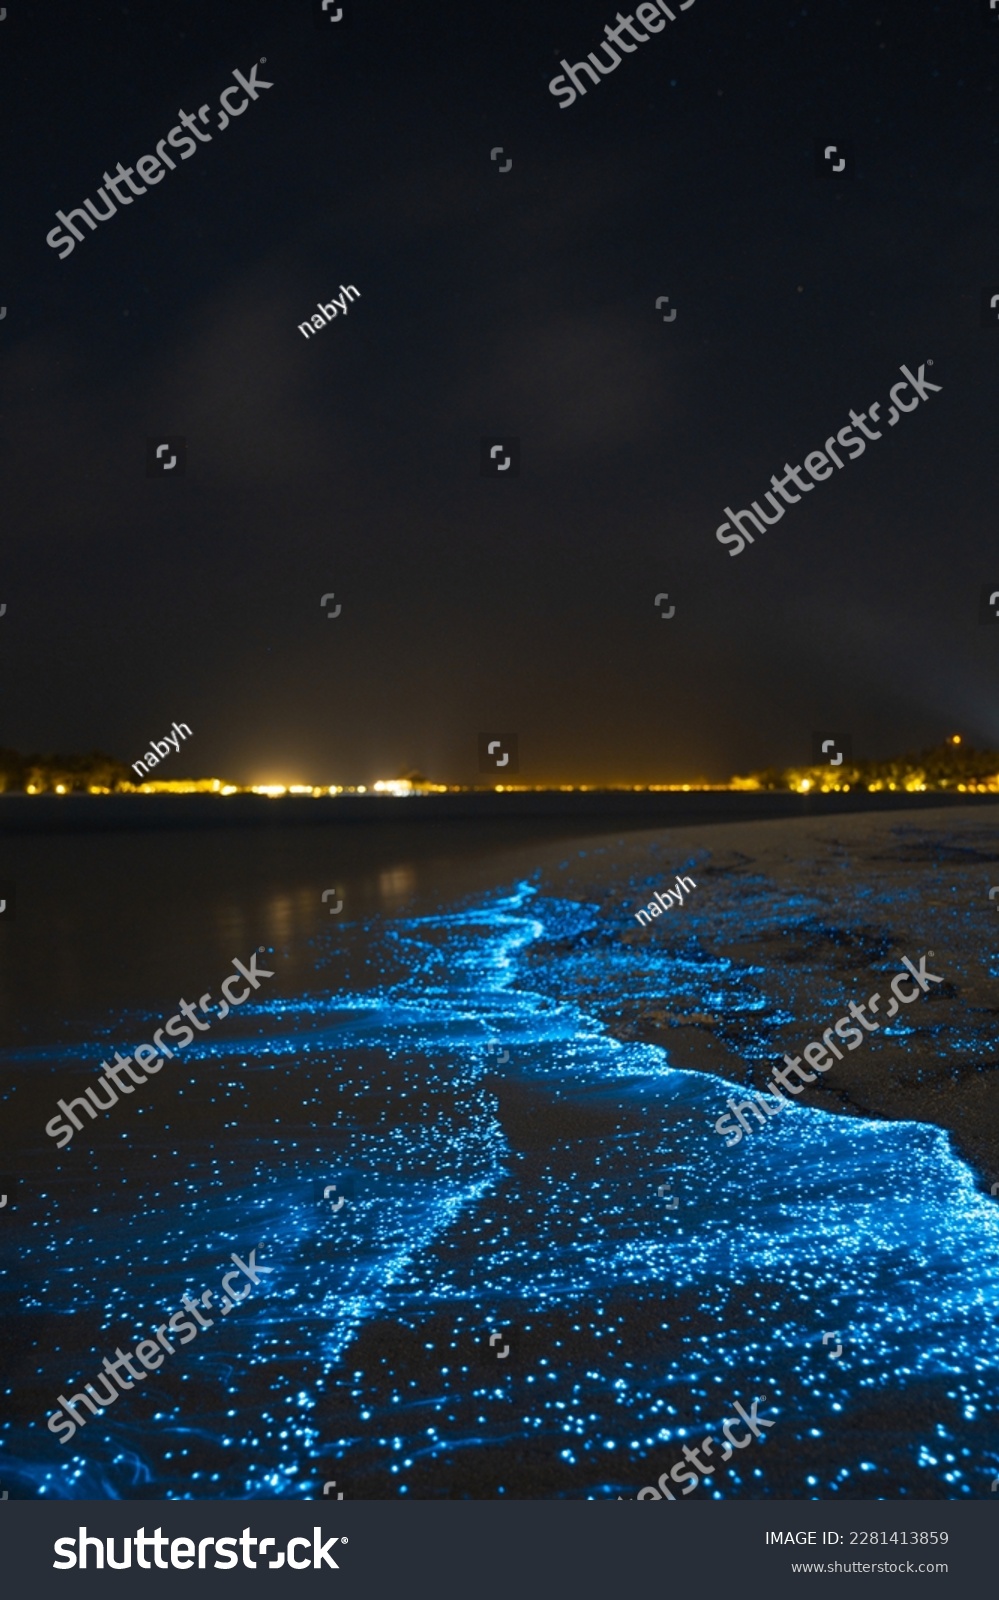 Bioluminescent glowing beach. Bio luminescence. Illumination of plankton at Maldives. Many bright particles at the beach.  #2281413859